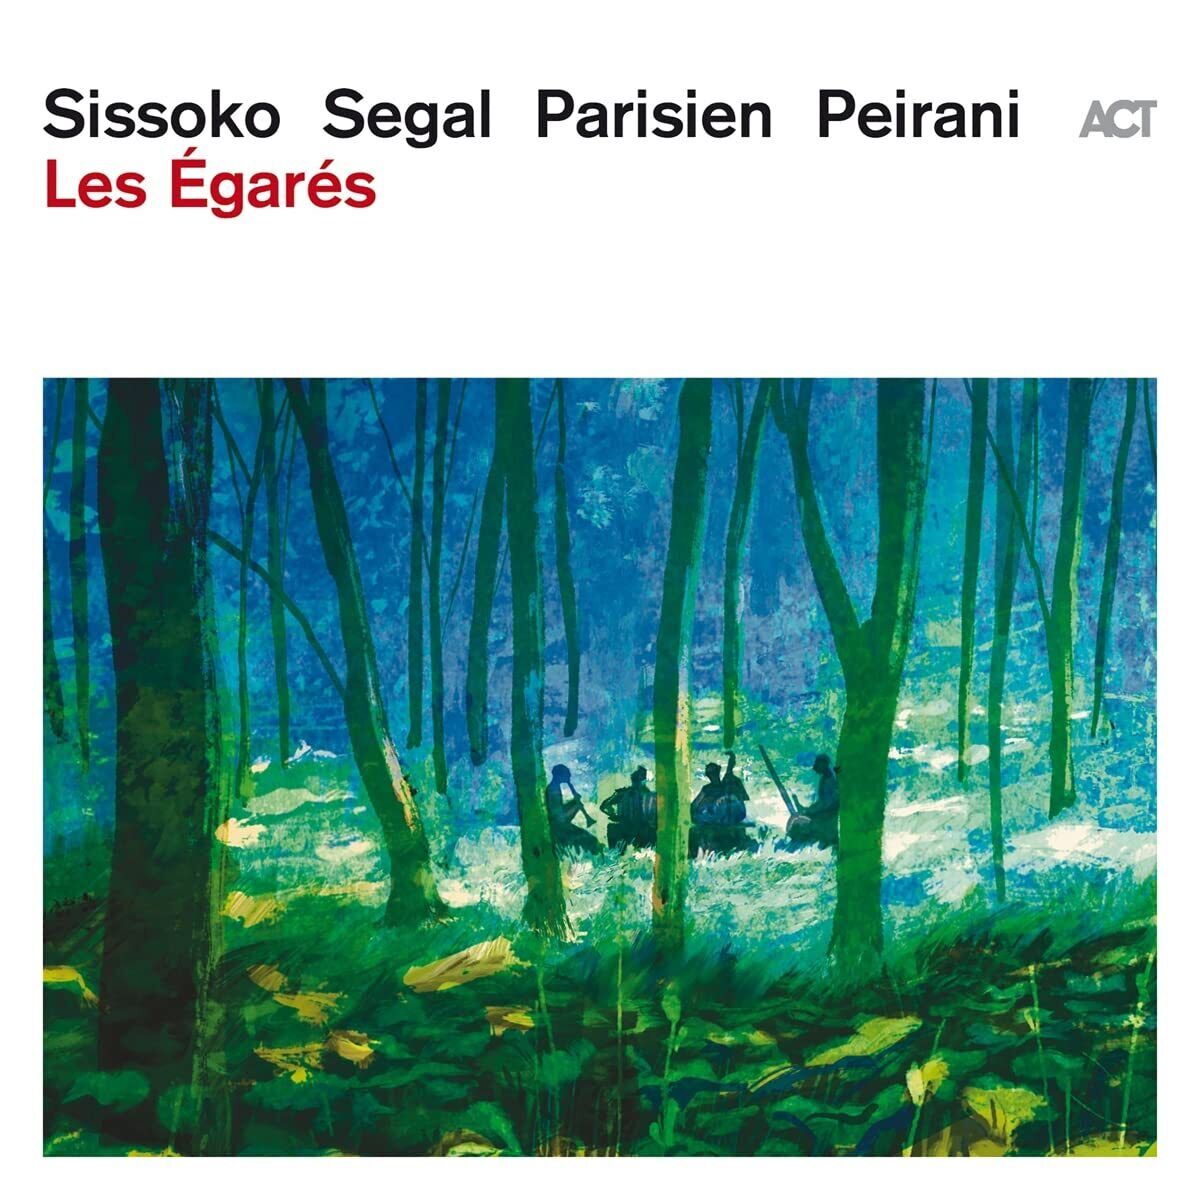 Les Egares | Ballake Sissoko, Vincent Segal, Emile Parisien, Vincent Peirani